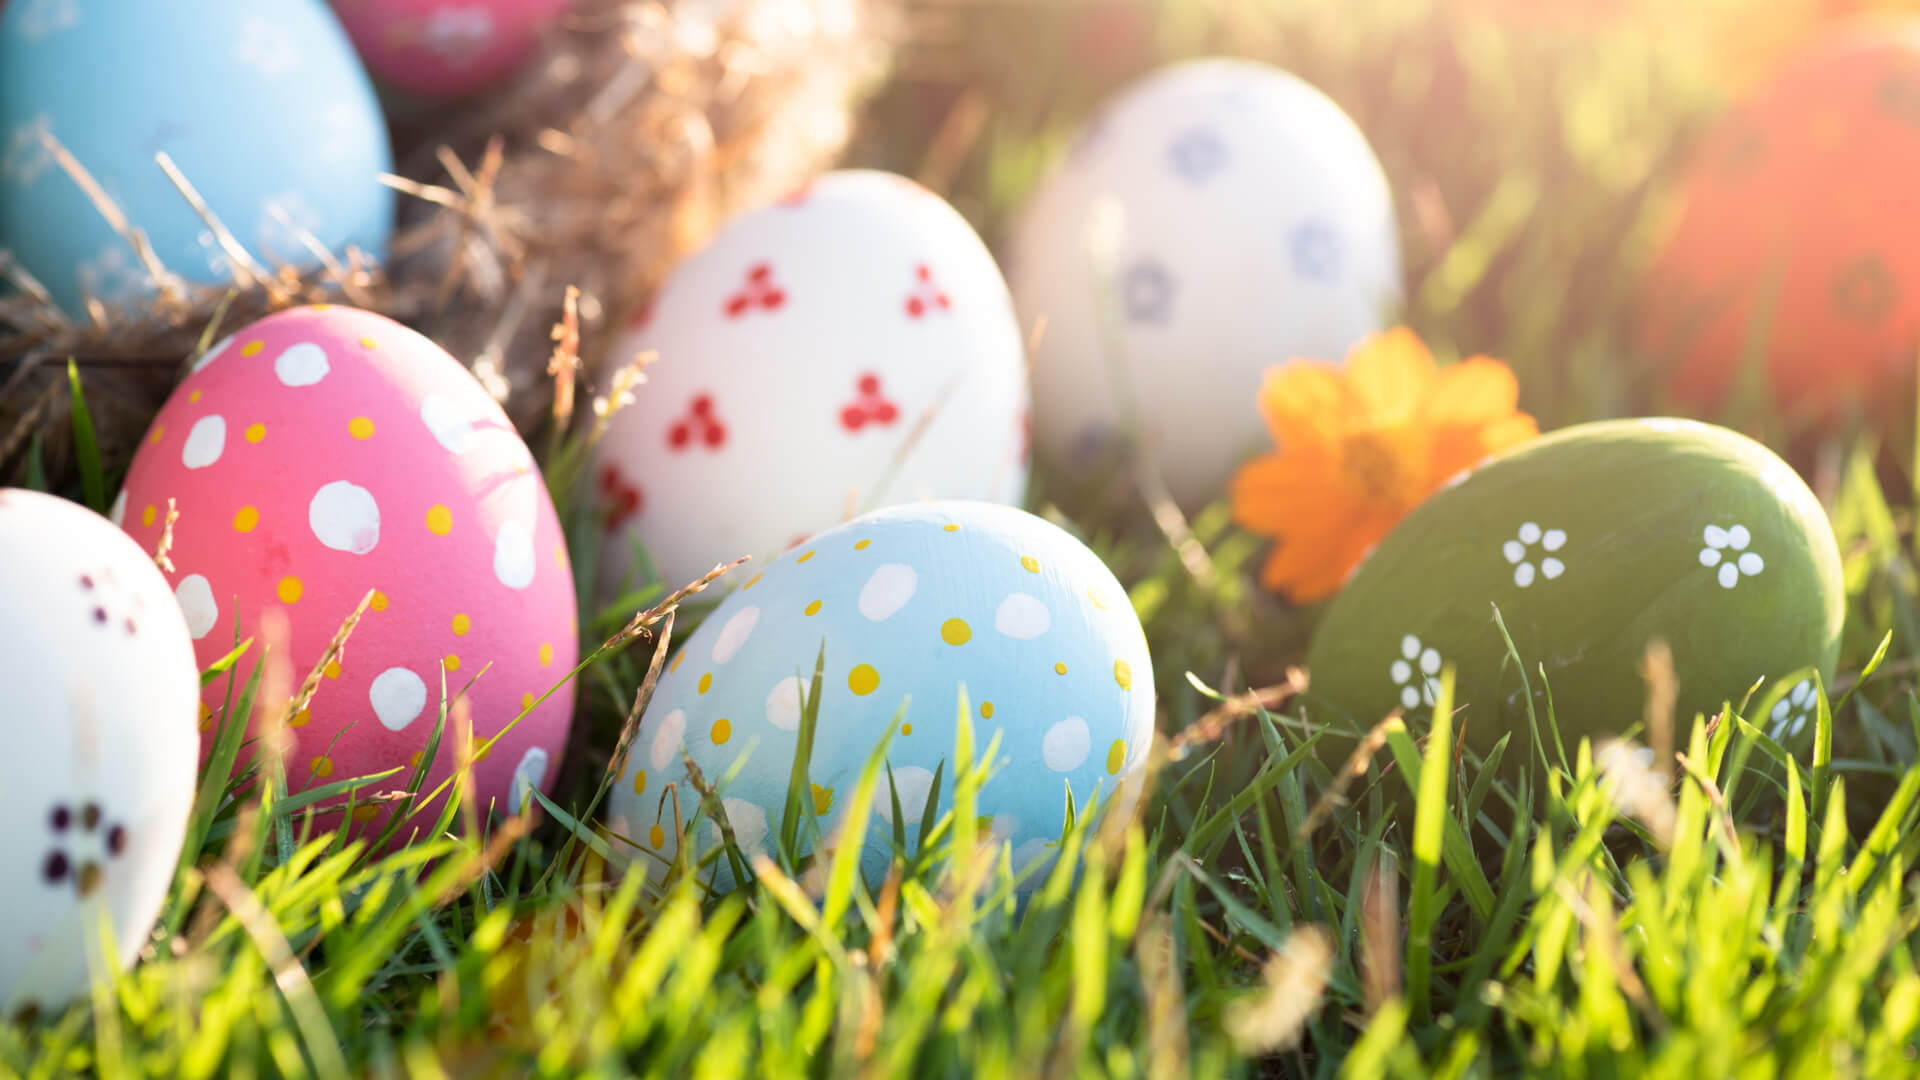 Some multi-coloured Easter eggs.